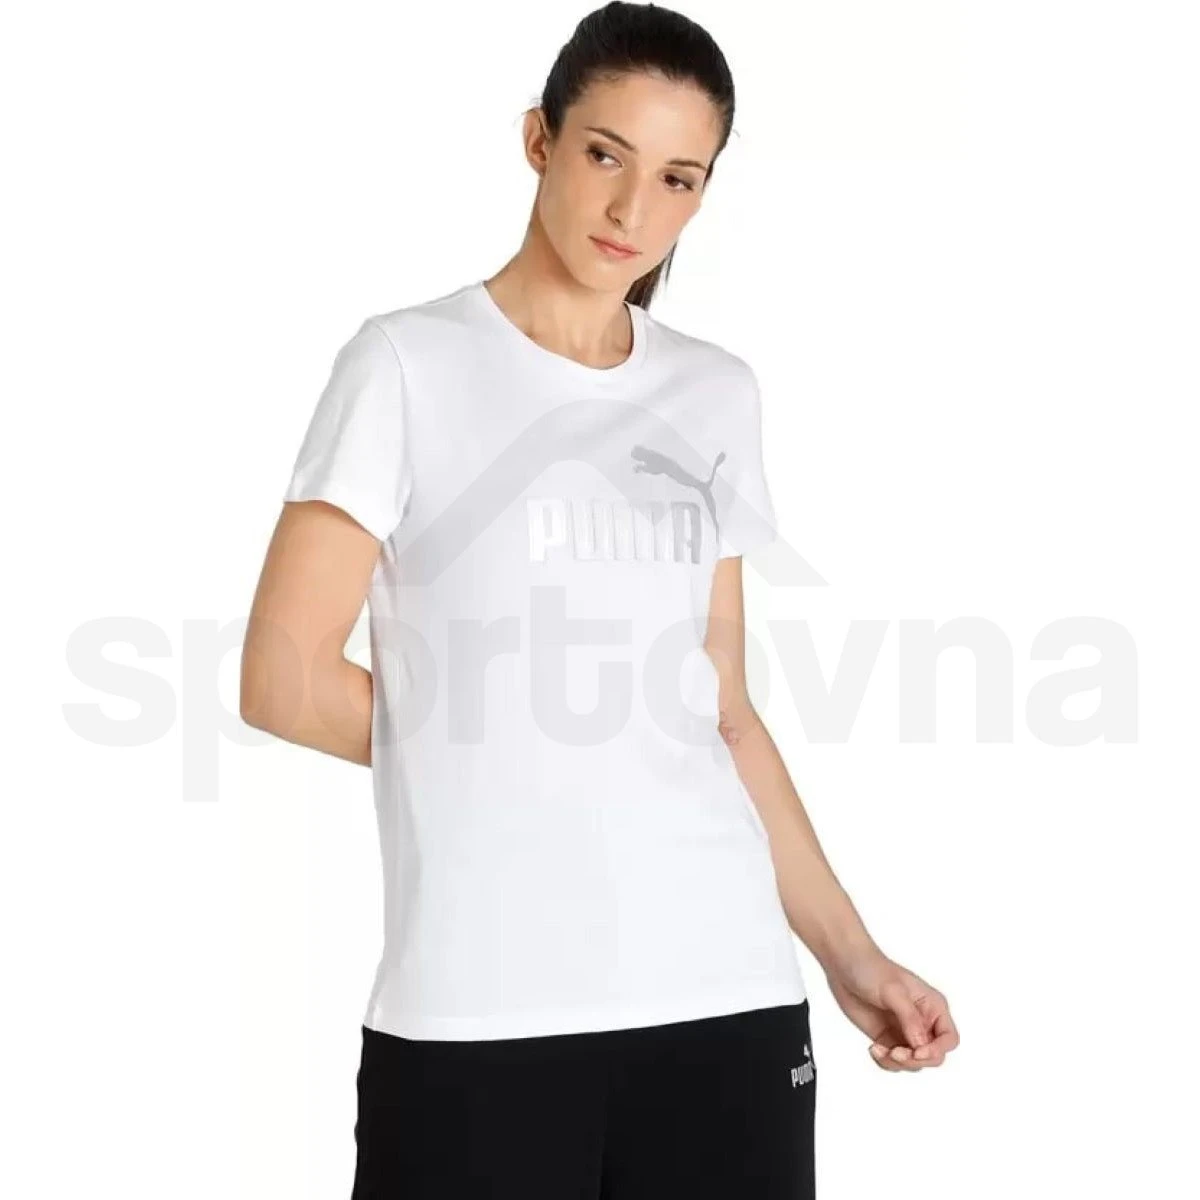 Dámské tričko Puma ESS+ Metallic white/silver - Tee Logo - Sportovna 84830302 metallic W